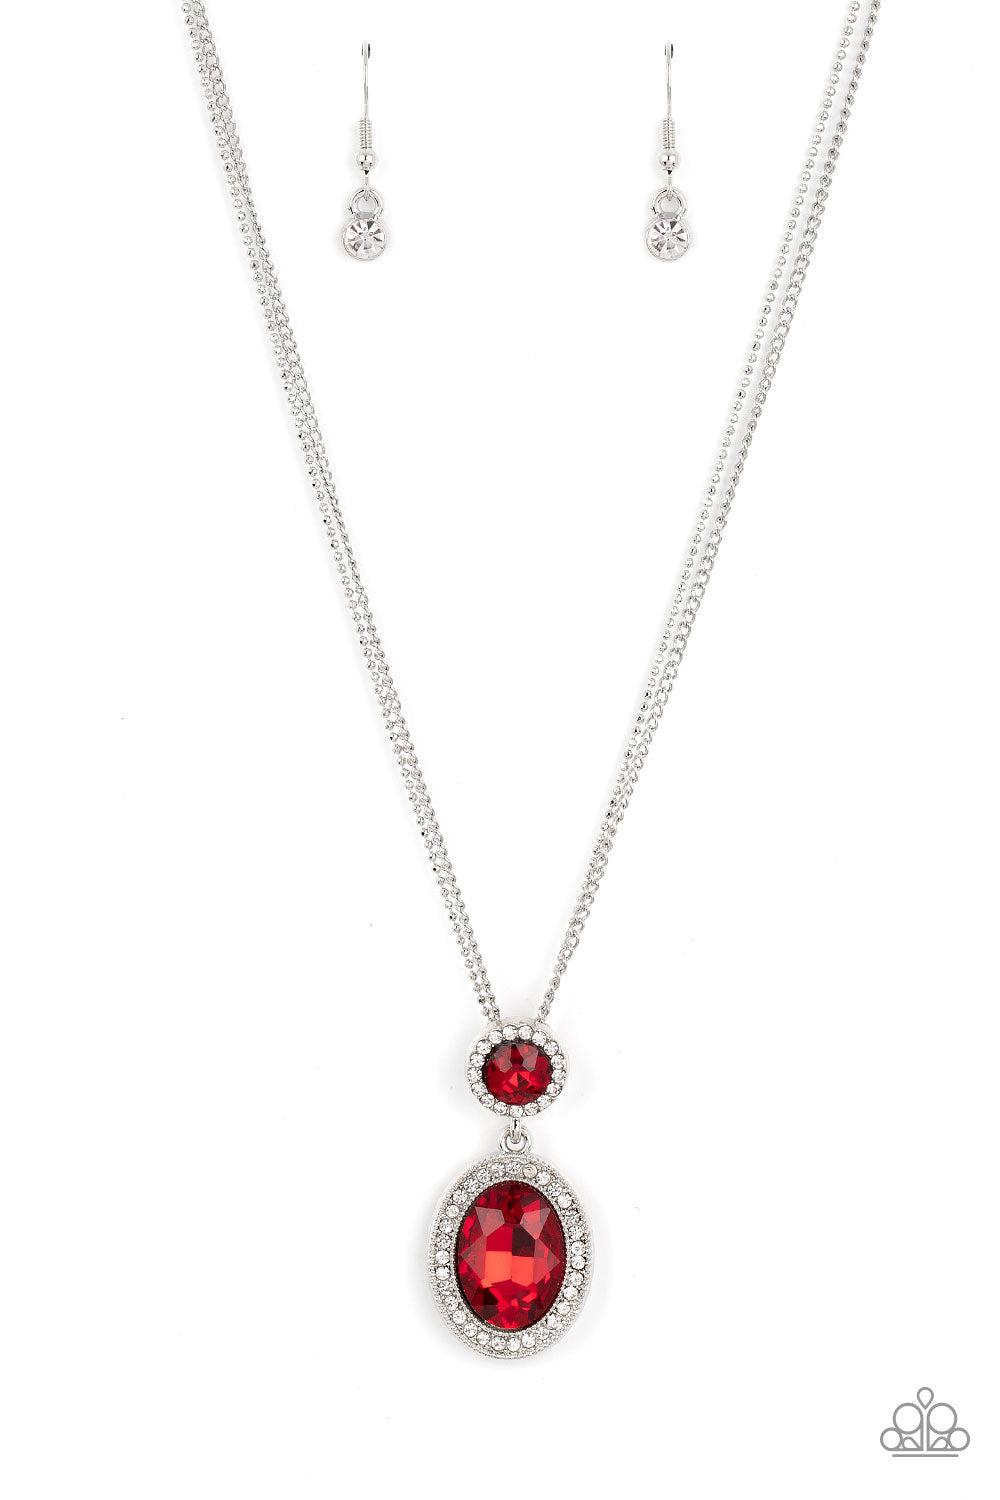 Castle Diamonds Red Rhinestone Necklace - Paparazzi Accessories- lightbox - CarasShop.com - $5 Jewelry by Cara Jewels